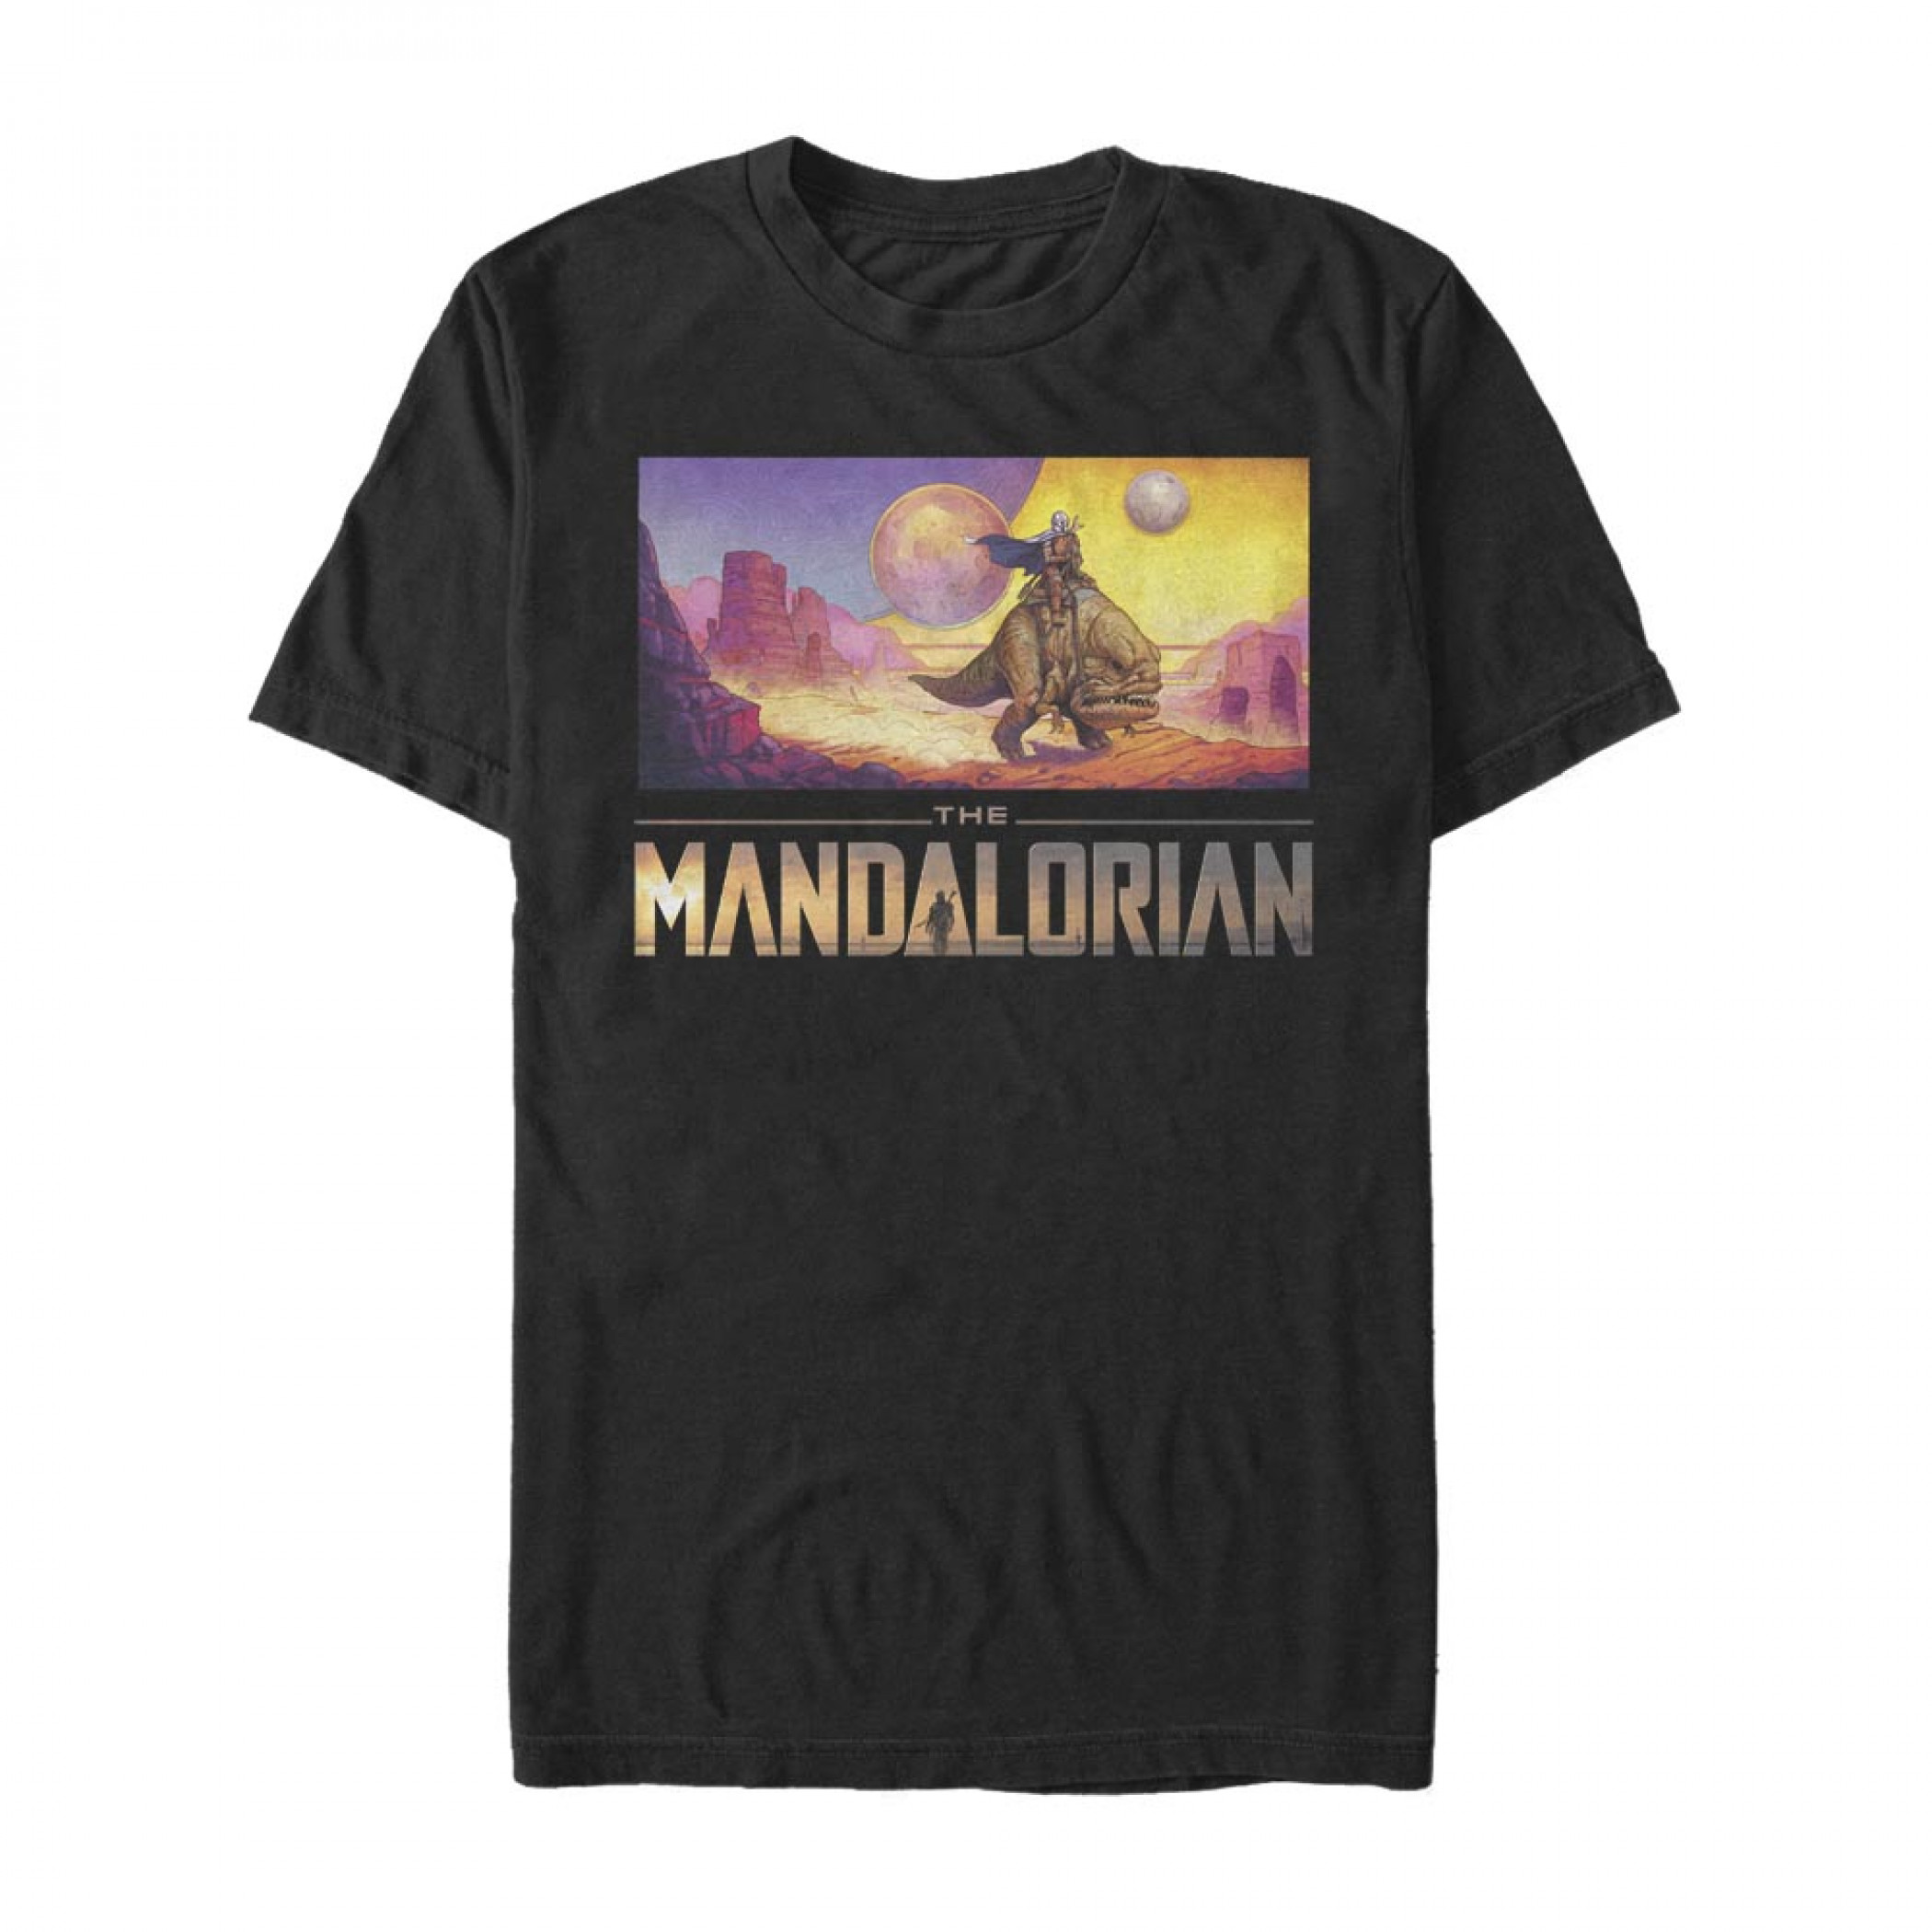 The Mandalorian Dreamscape T-Shirt